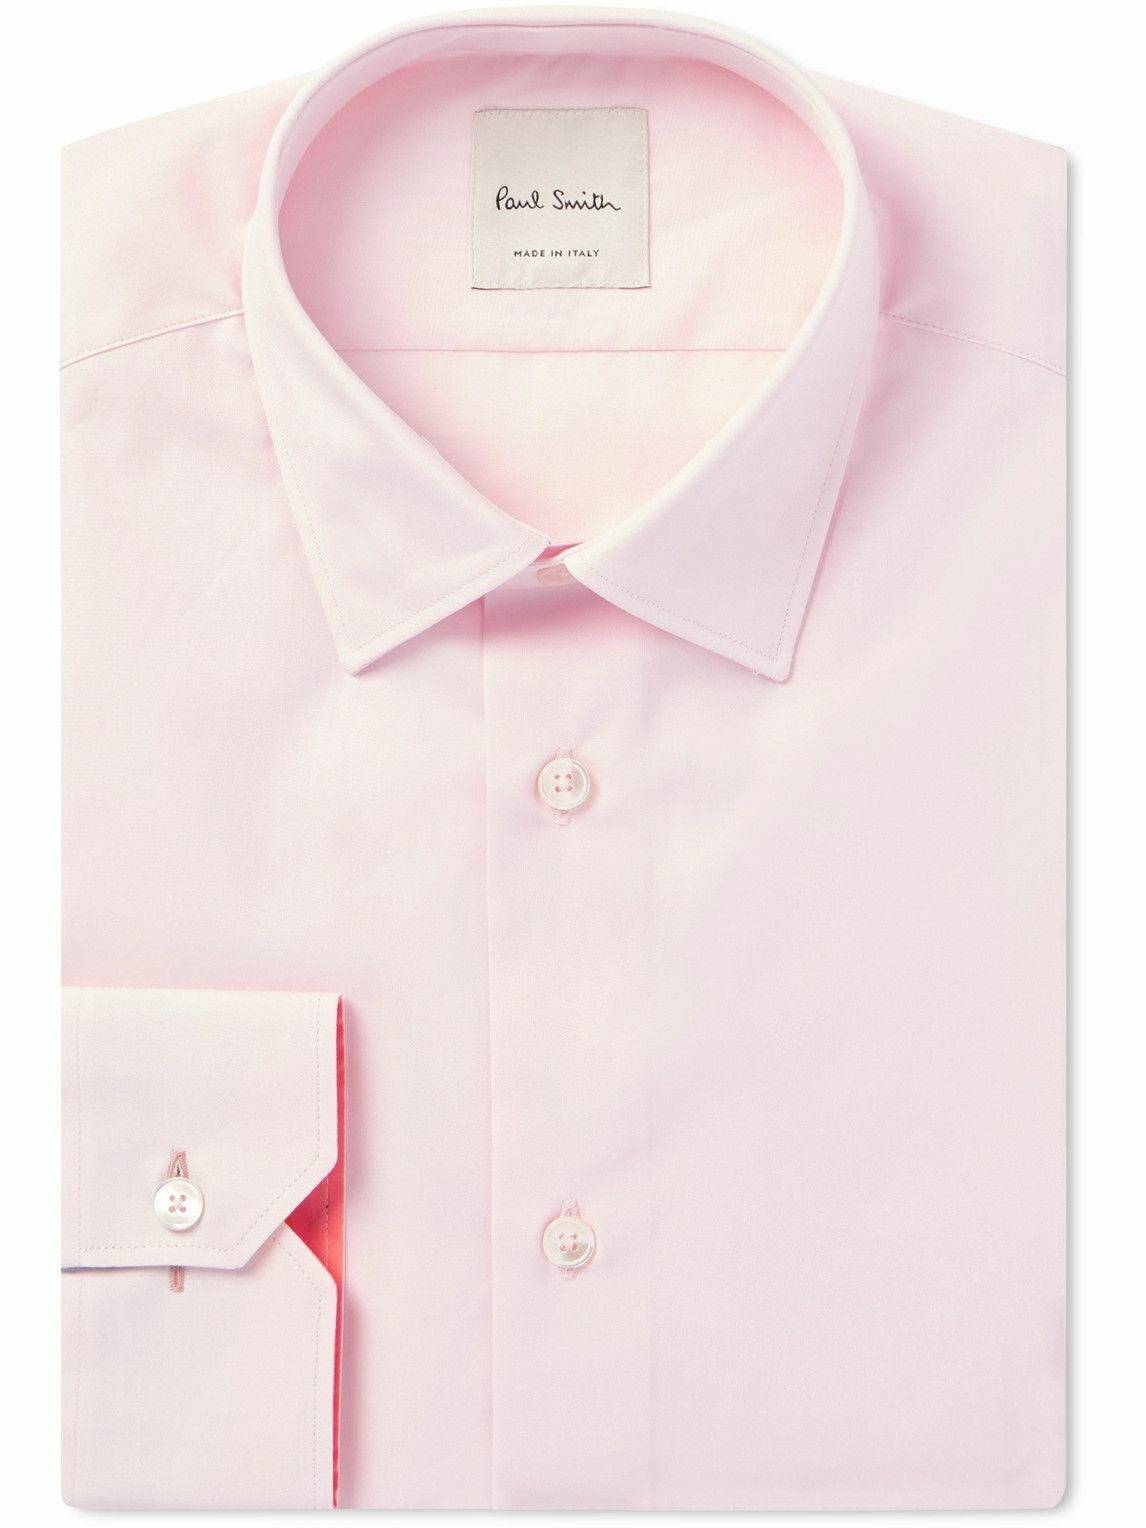 Paul Smith - Slim-Fit Cotton-Poplin Shirt - Pink Paul Smith